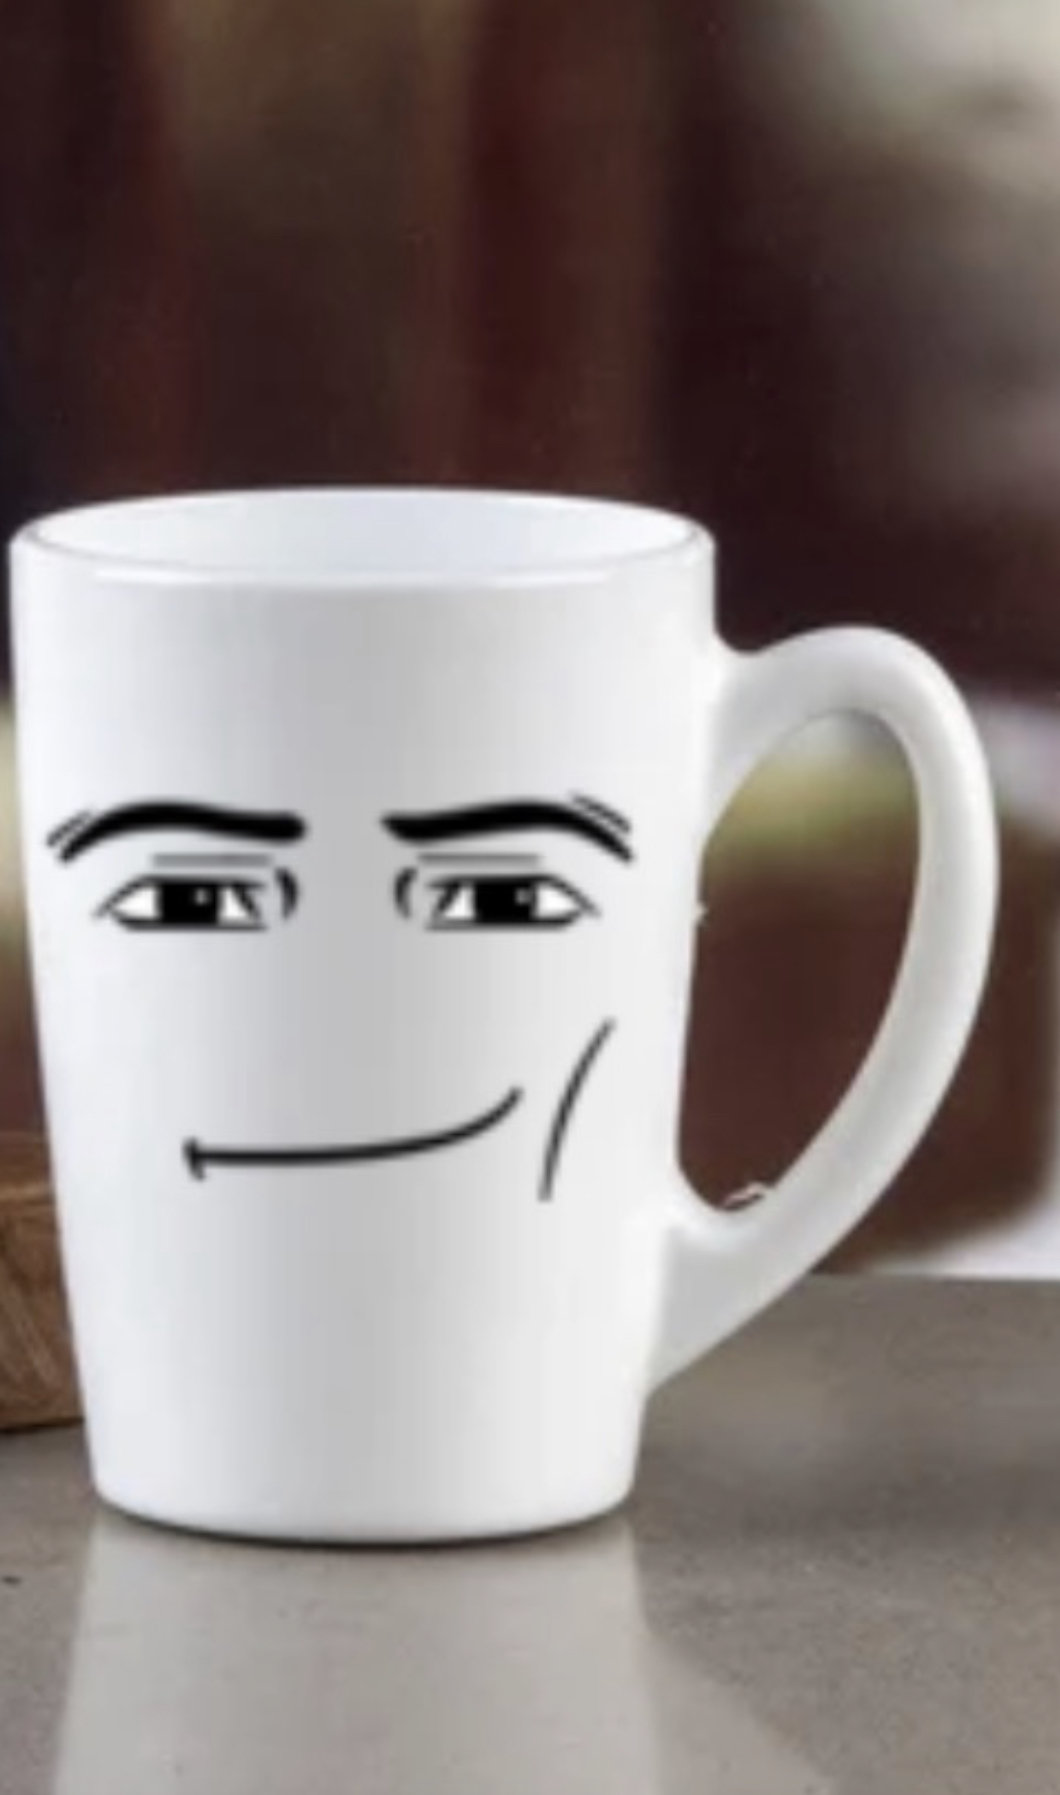 The manface mug is broken. - Imgflip